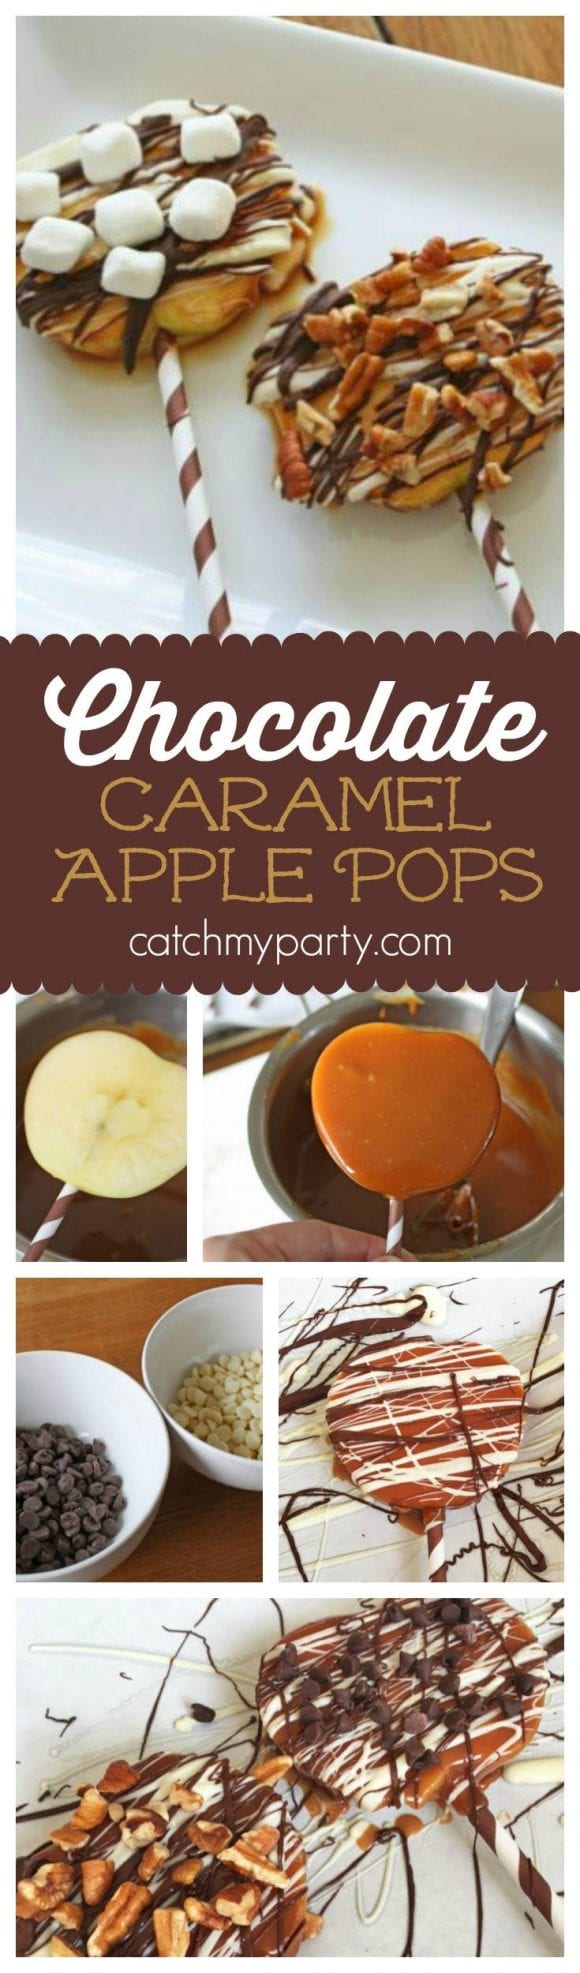 Chocolate Caramel Apple Pops | CatchMyParty.com